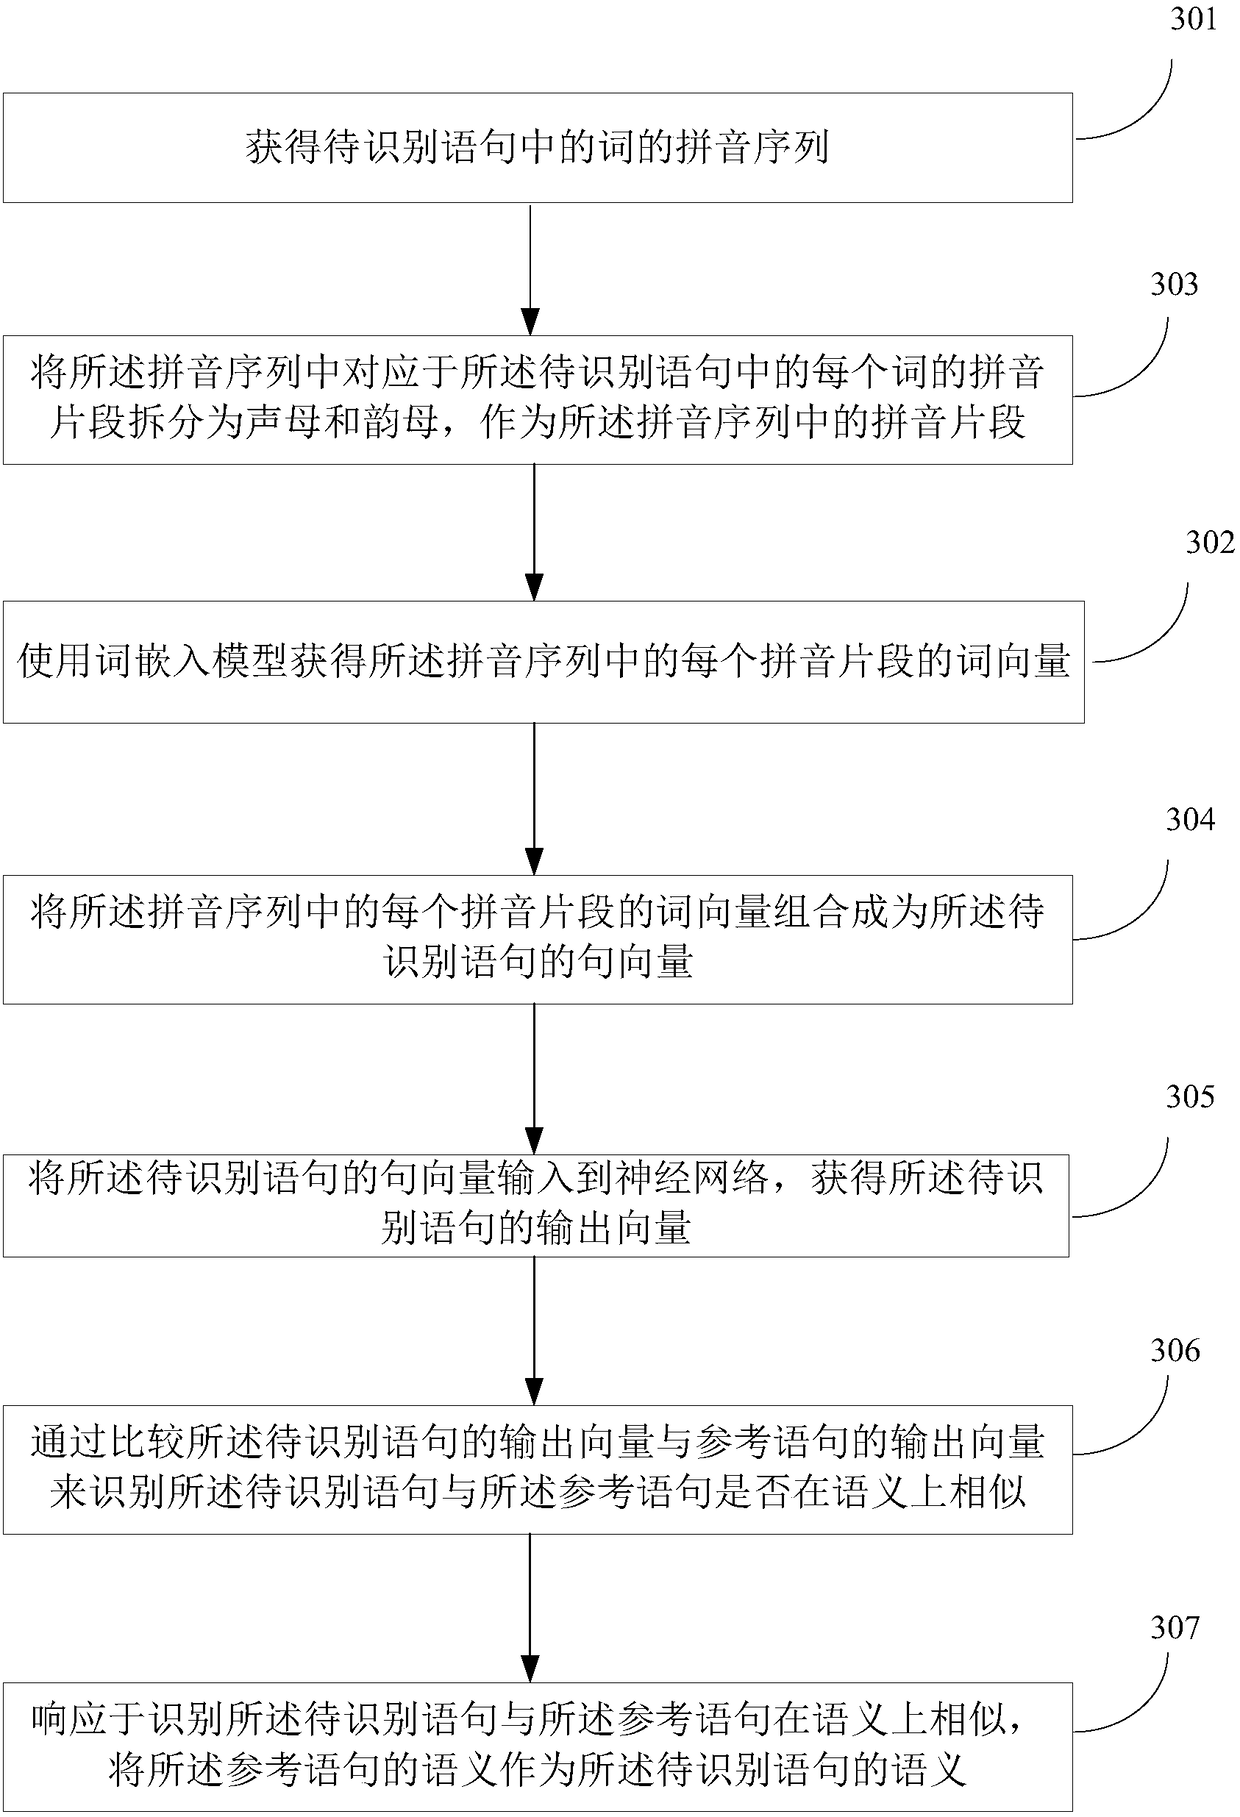 Pinyin-based semantic identification method and apparatus, and man-machine conversation system